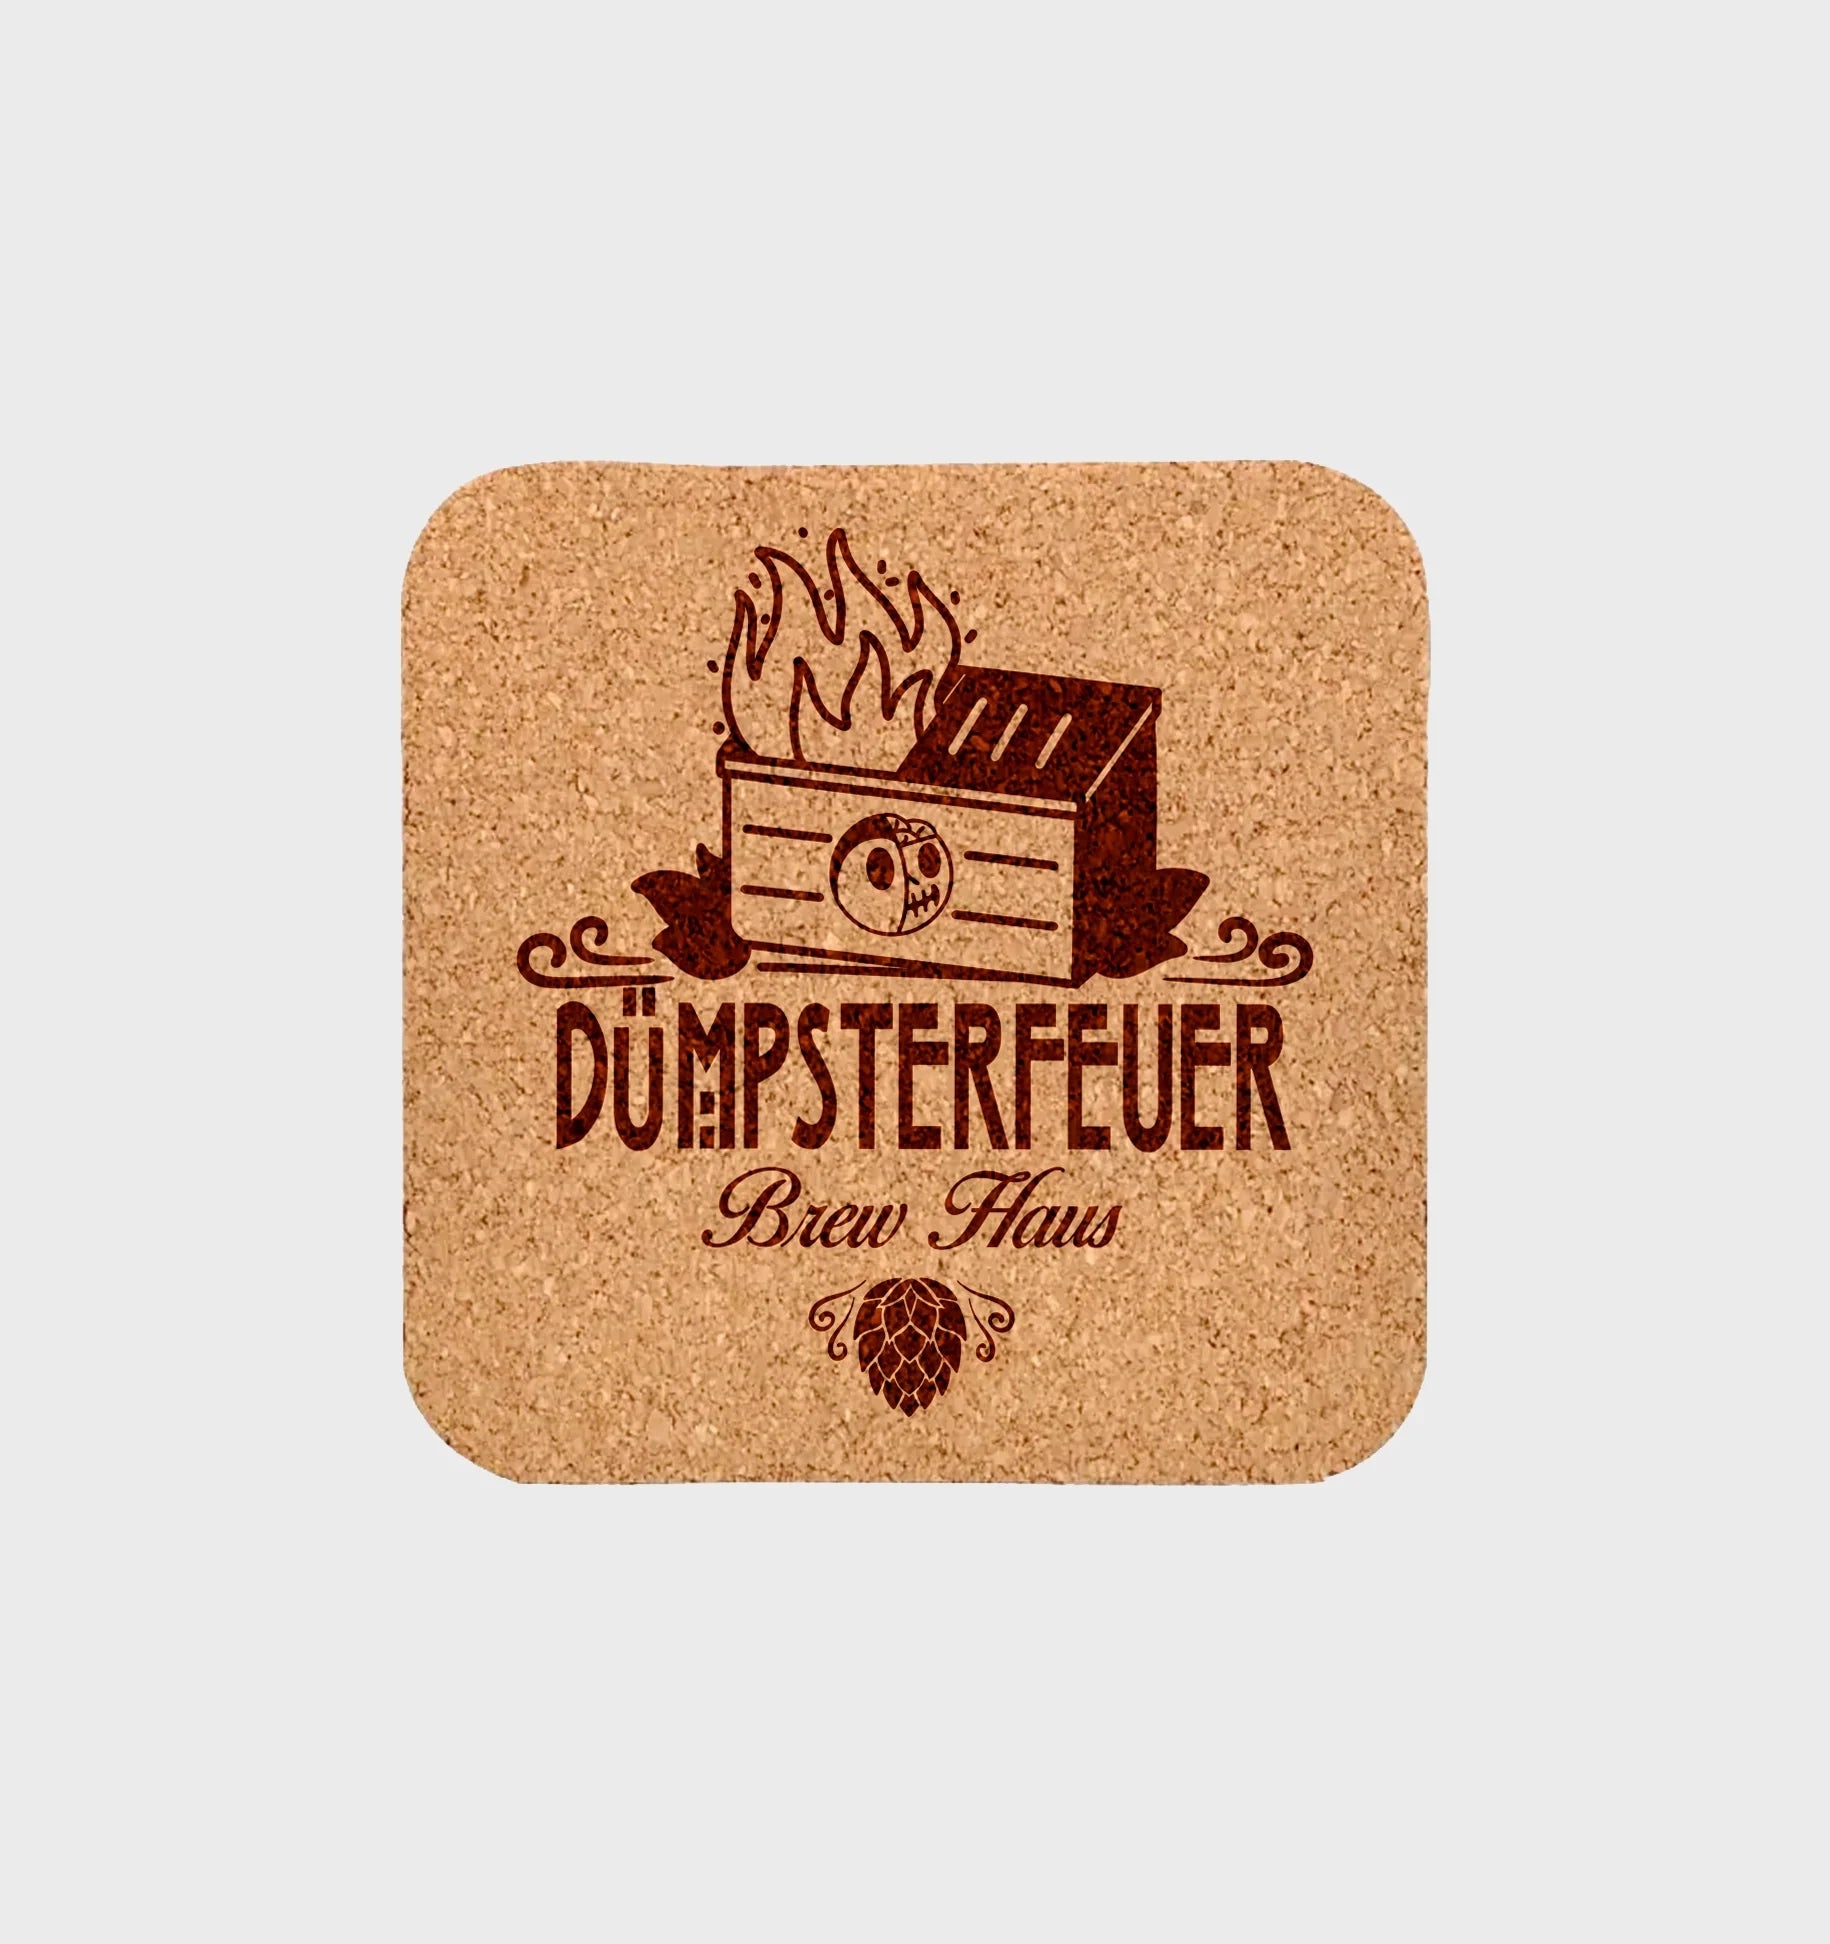 DumpsterFeuer Brew Haus - Cork Coaster 4 Pack